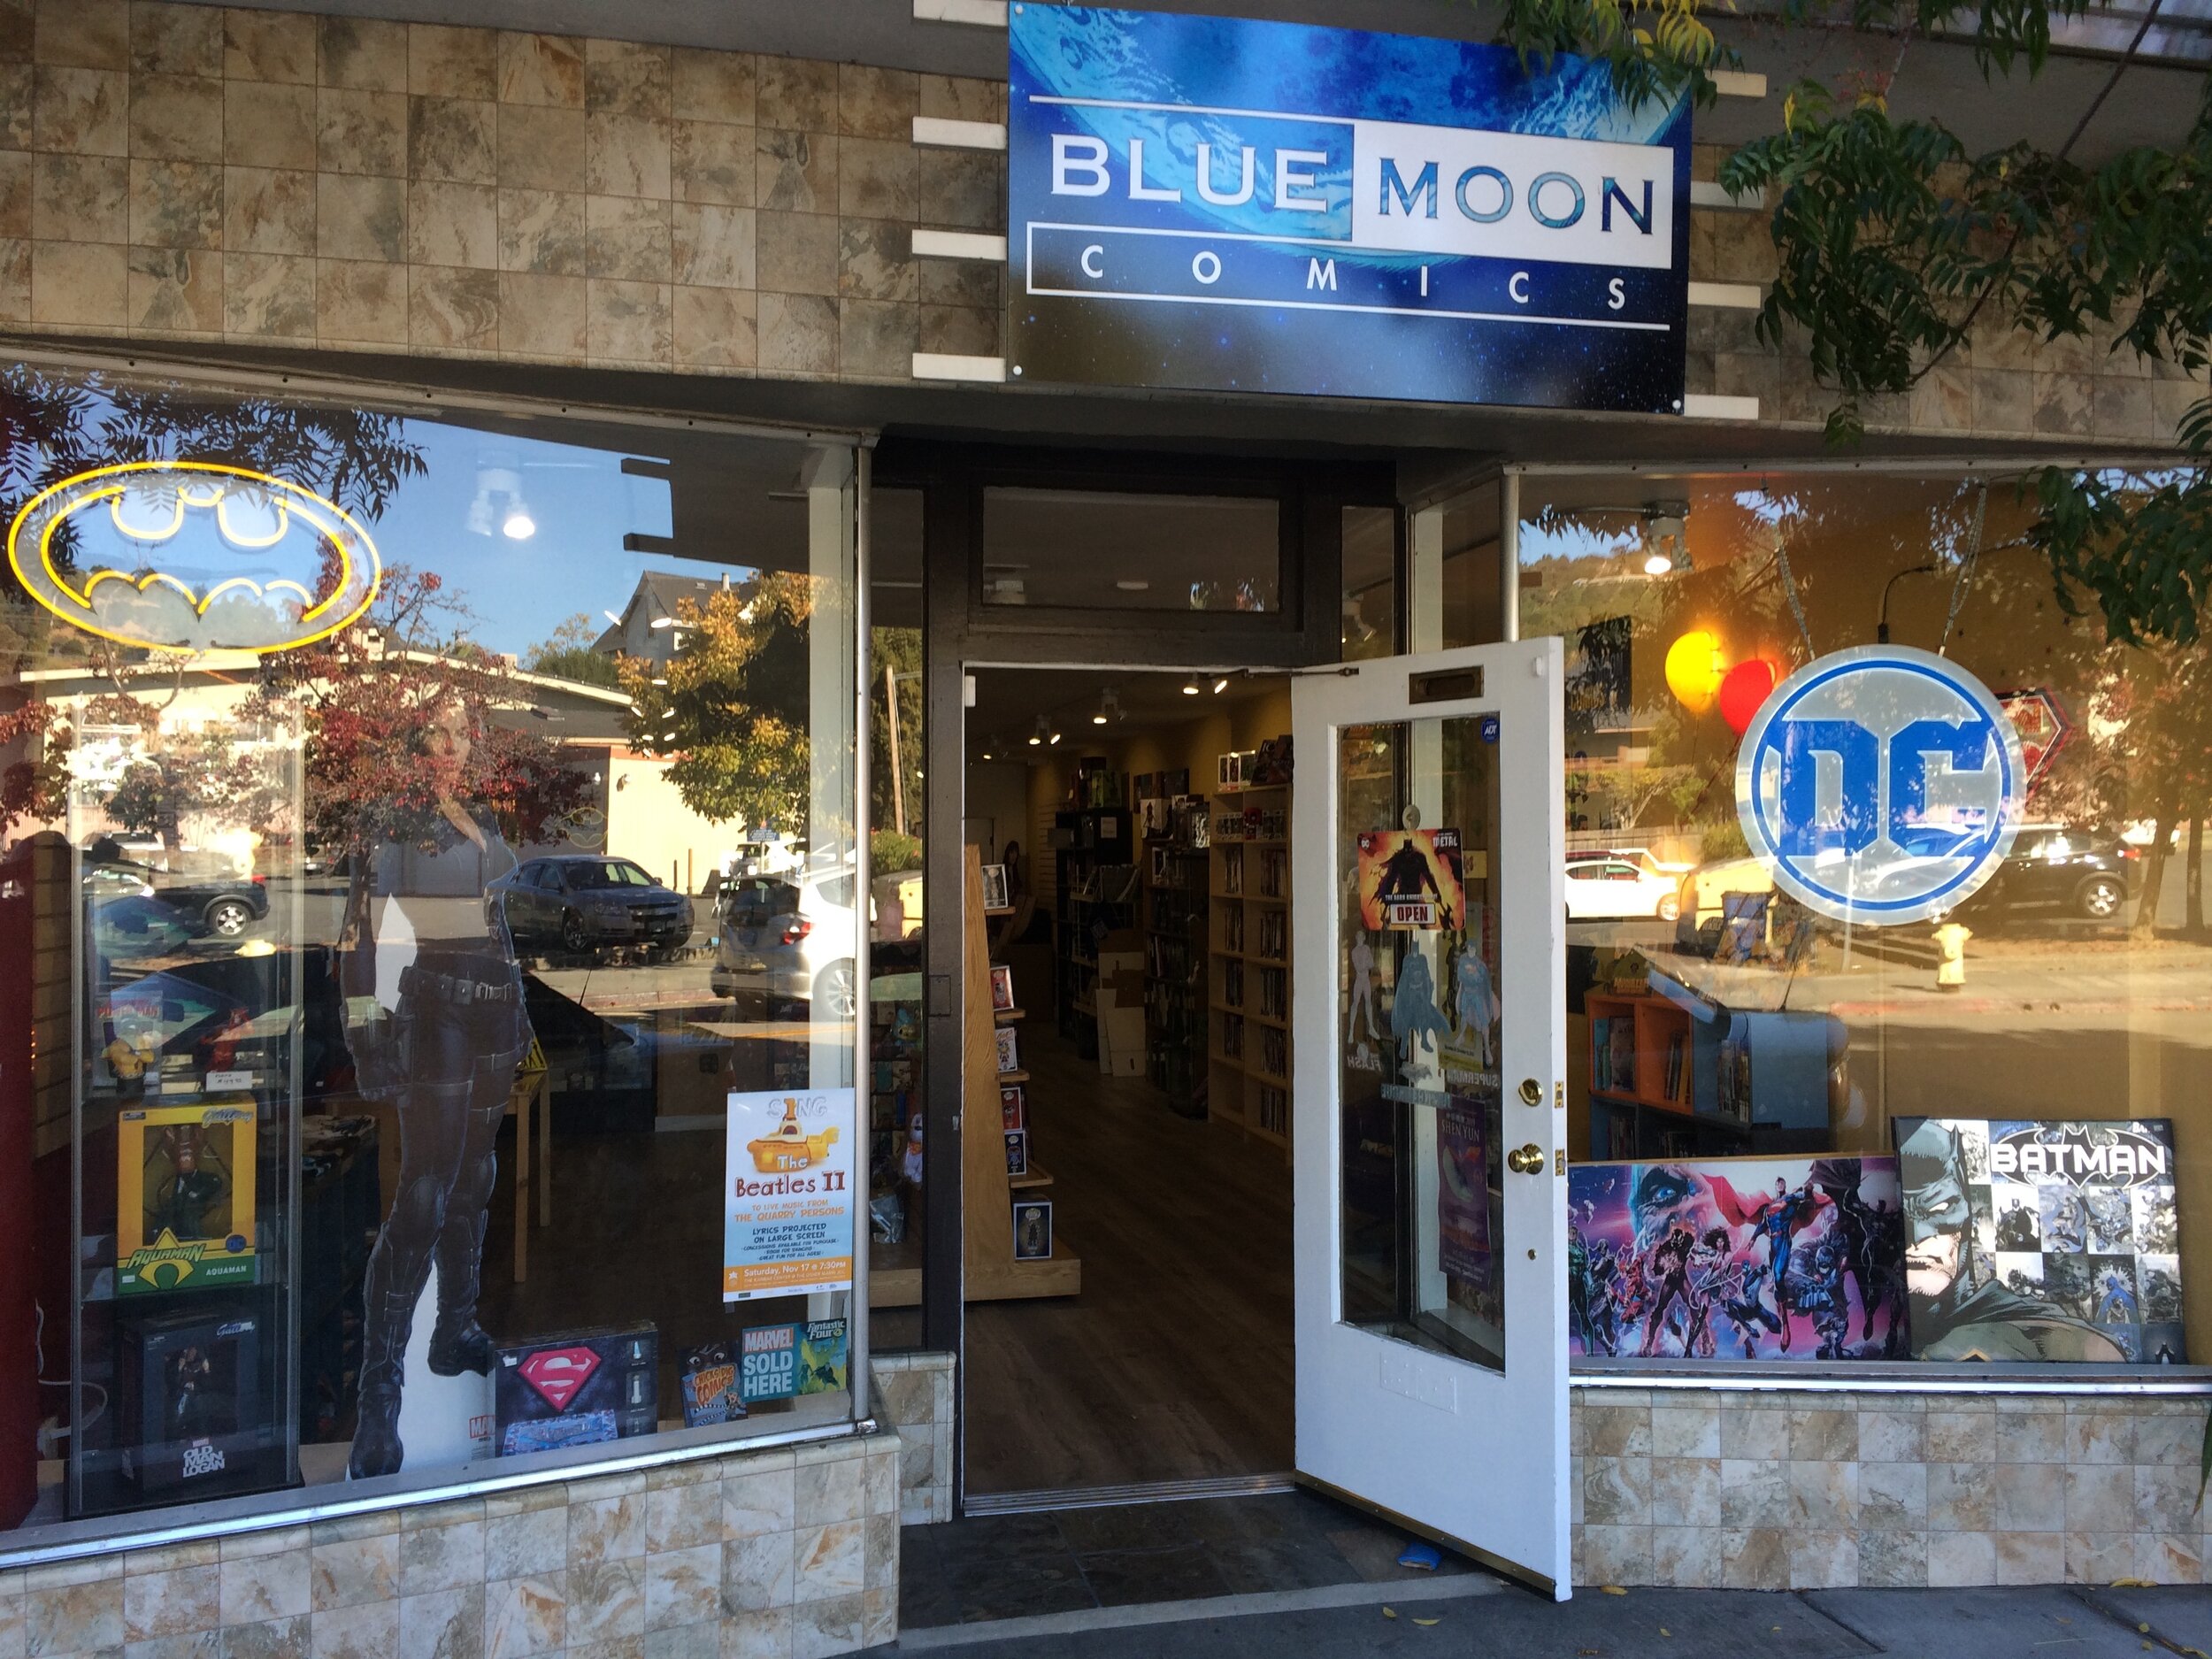 Blue moon comics